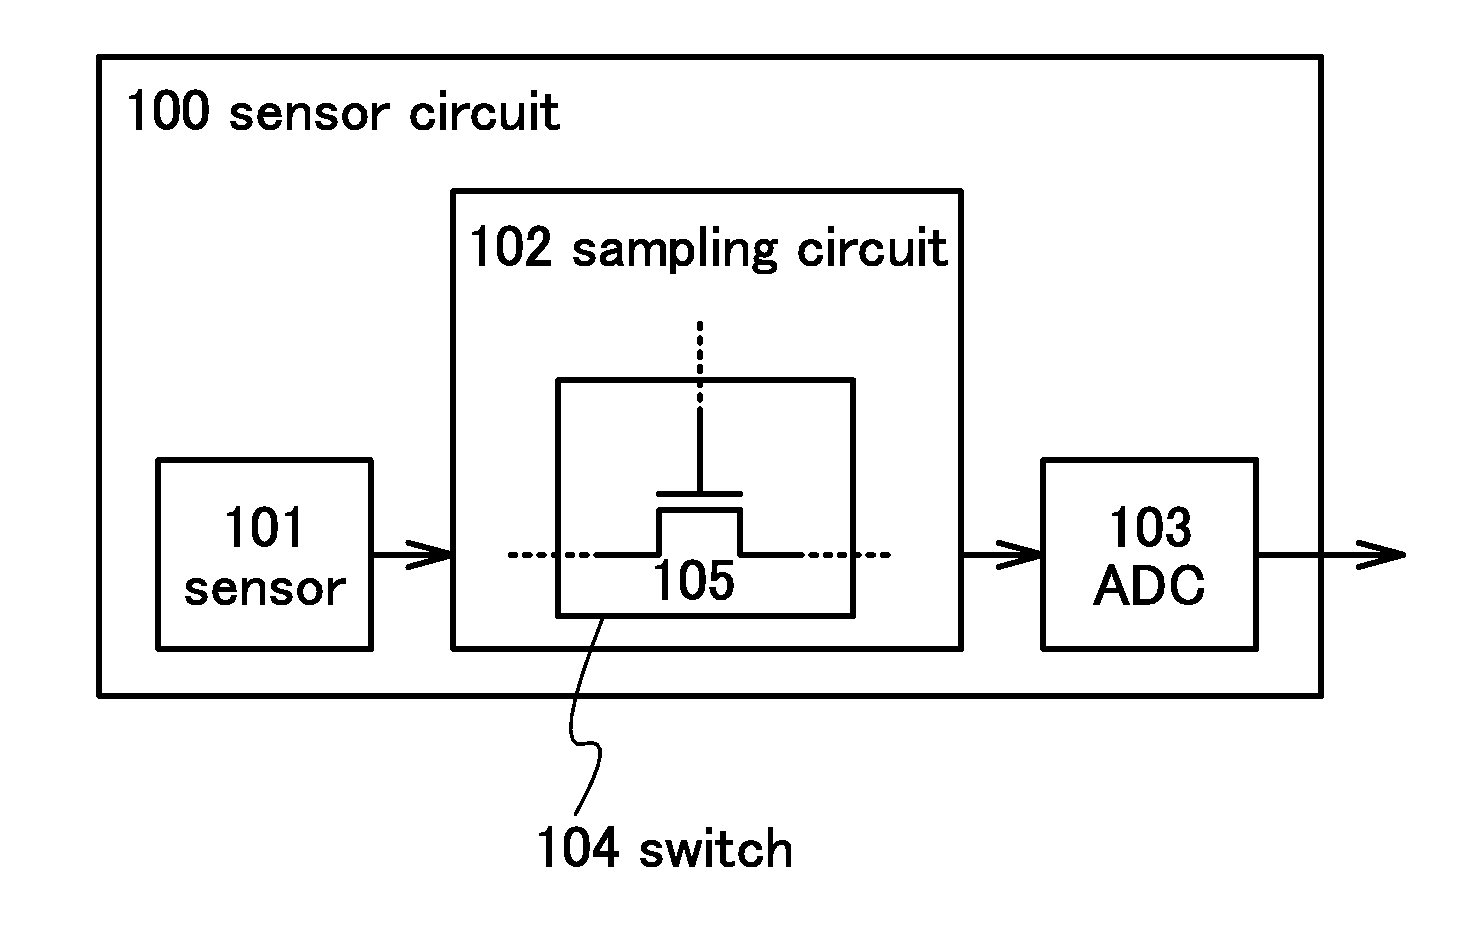 Circuit, sensor circuit, and semiconductor device using the sensor circuit